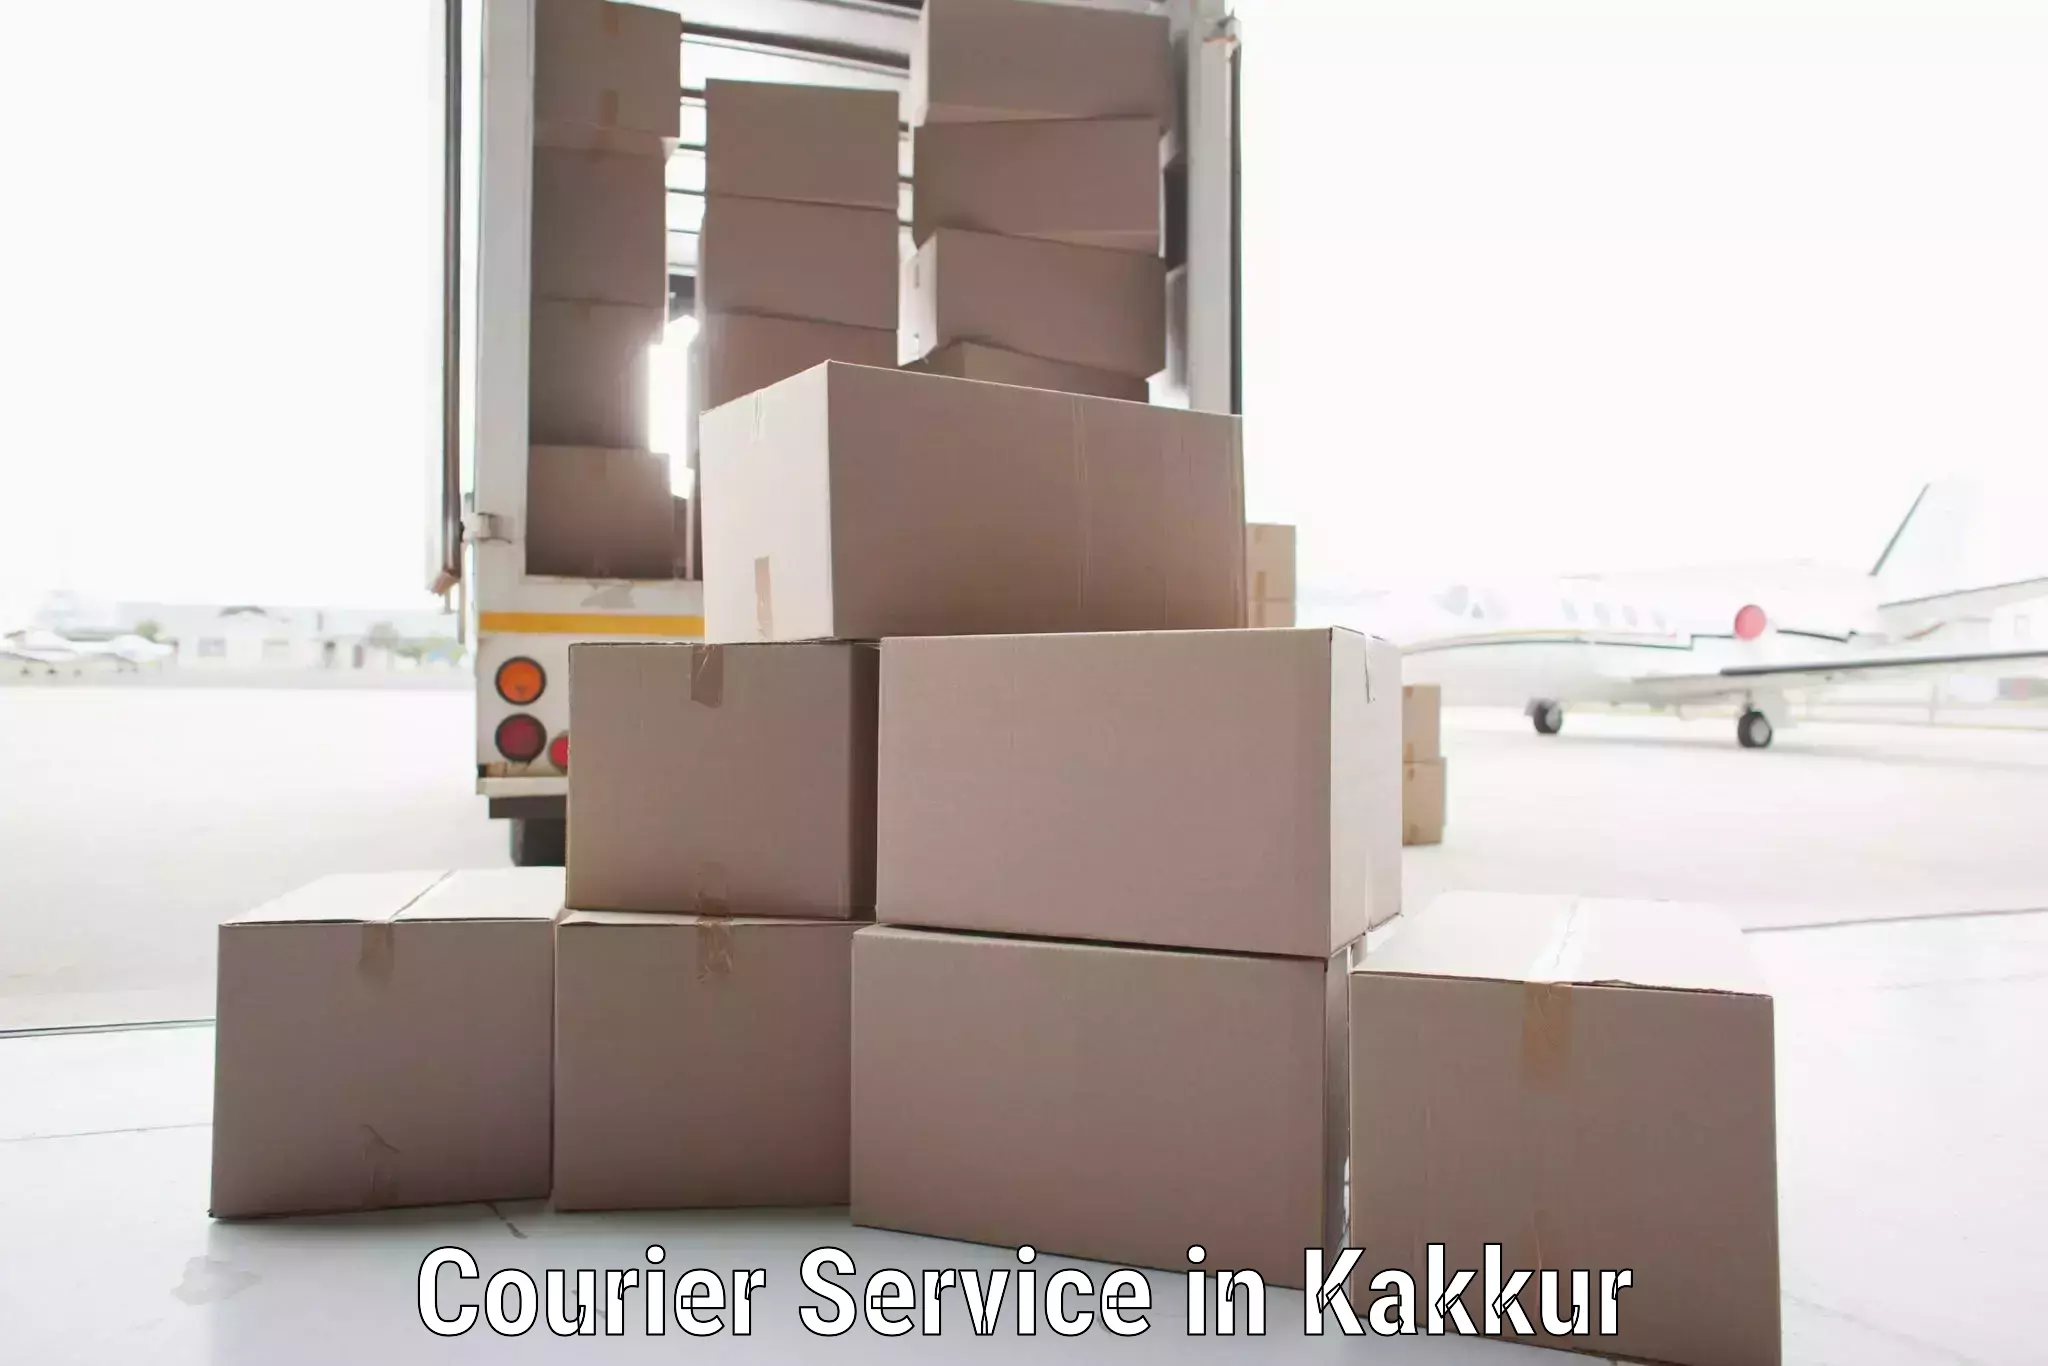 Streamlined shipping process in Kakkur